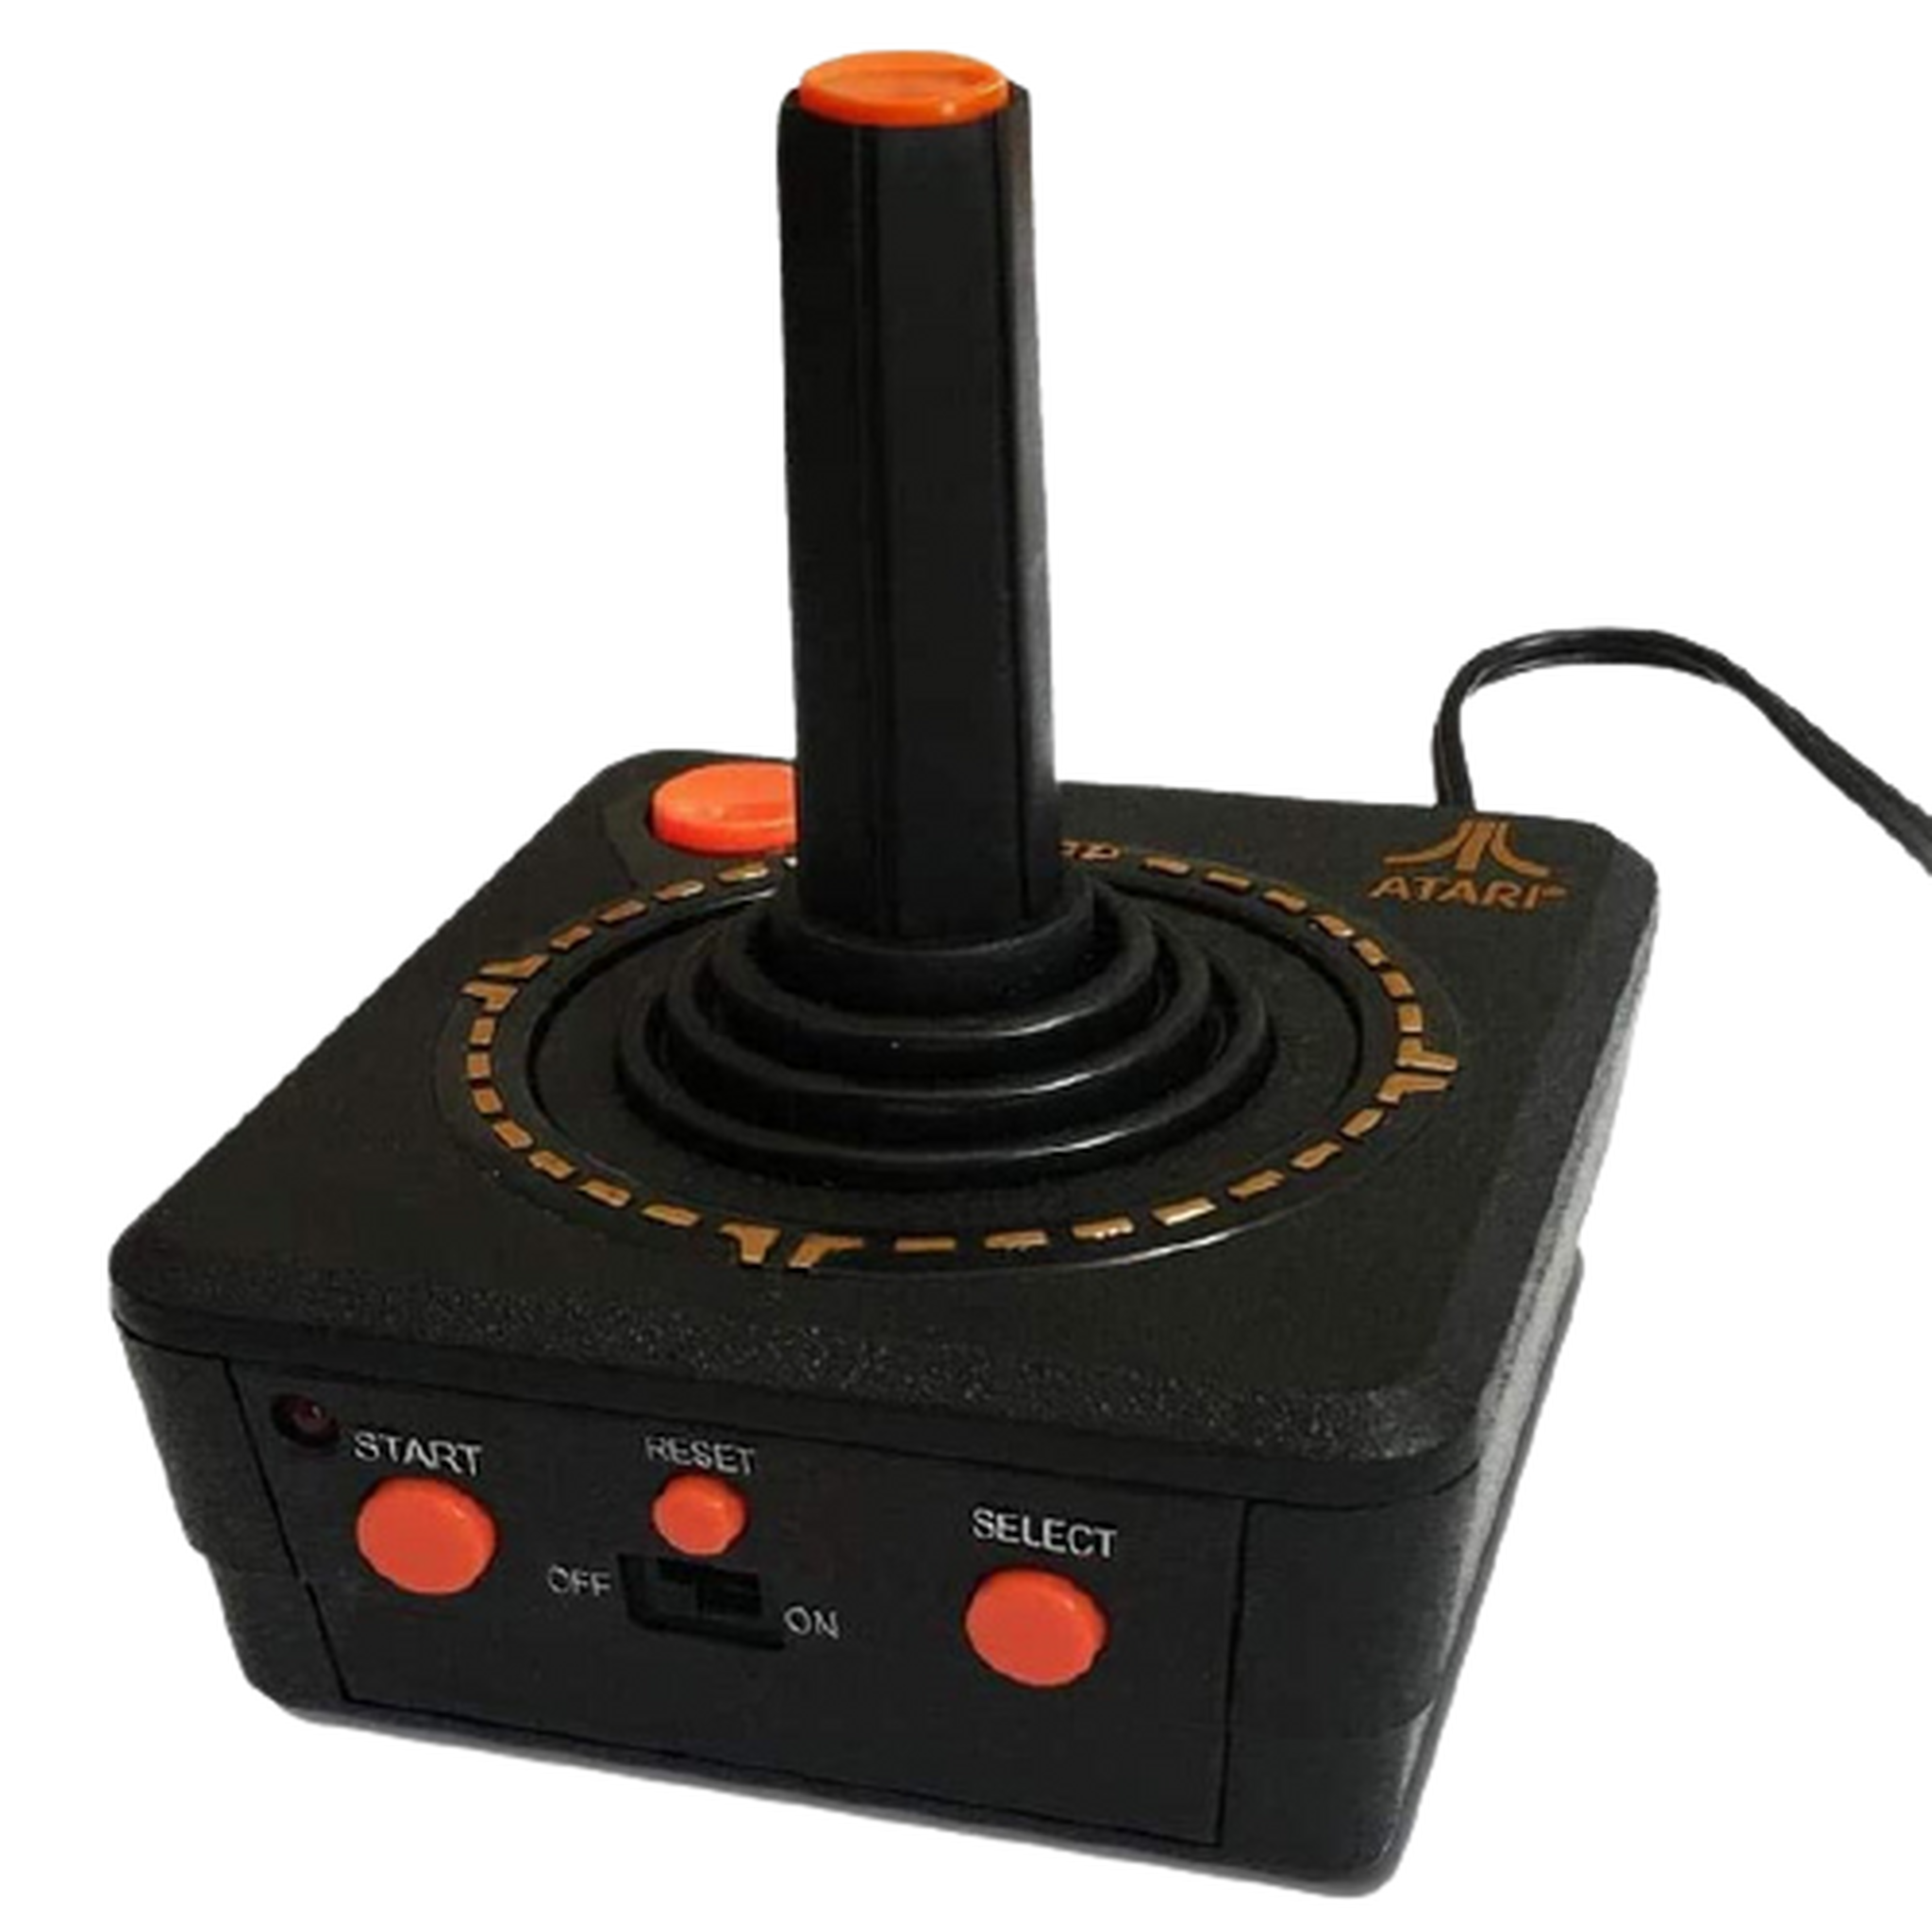 Atari Vault Bundle With Built-in 100 Games + PC Controller